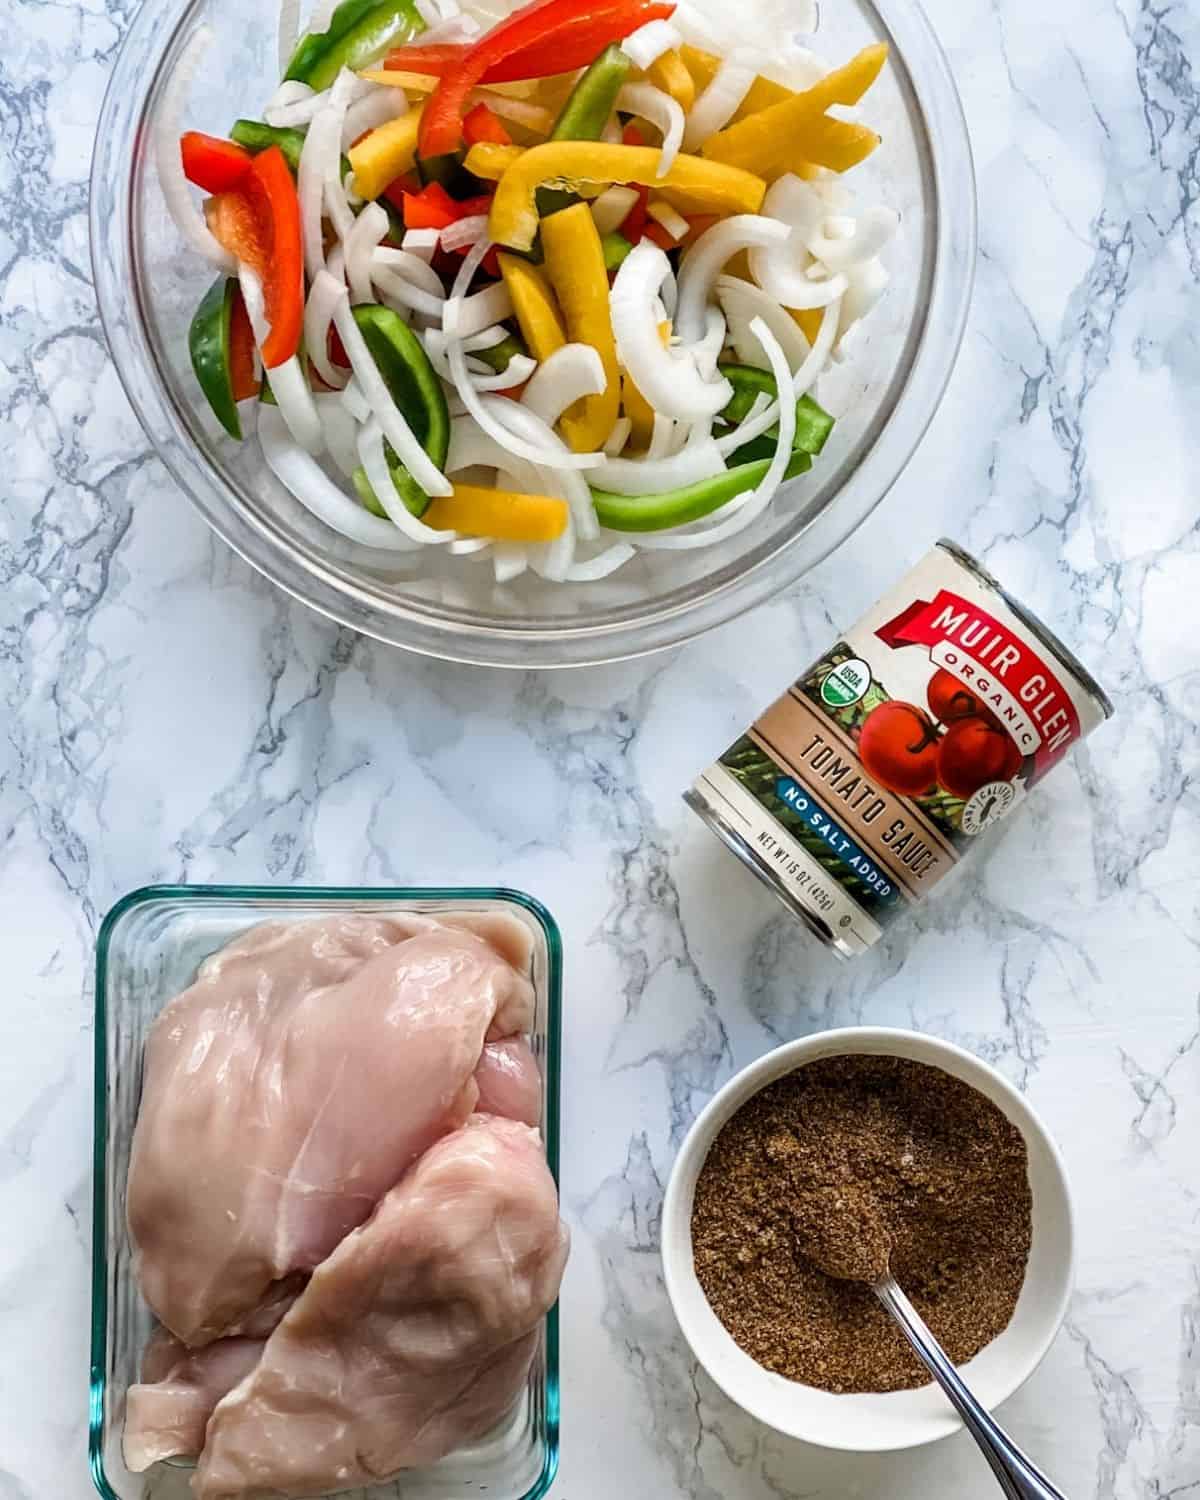 Ingredients to Make Crockpot Chicken Fajita